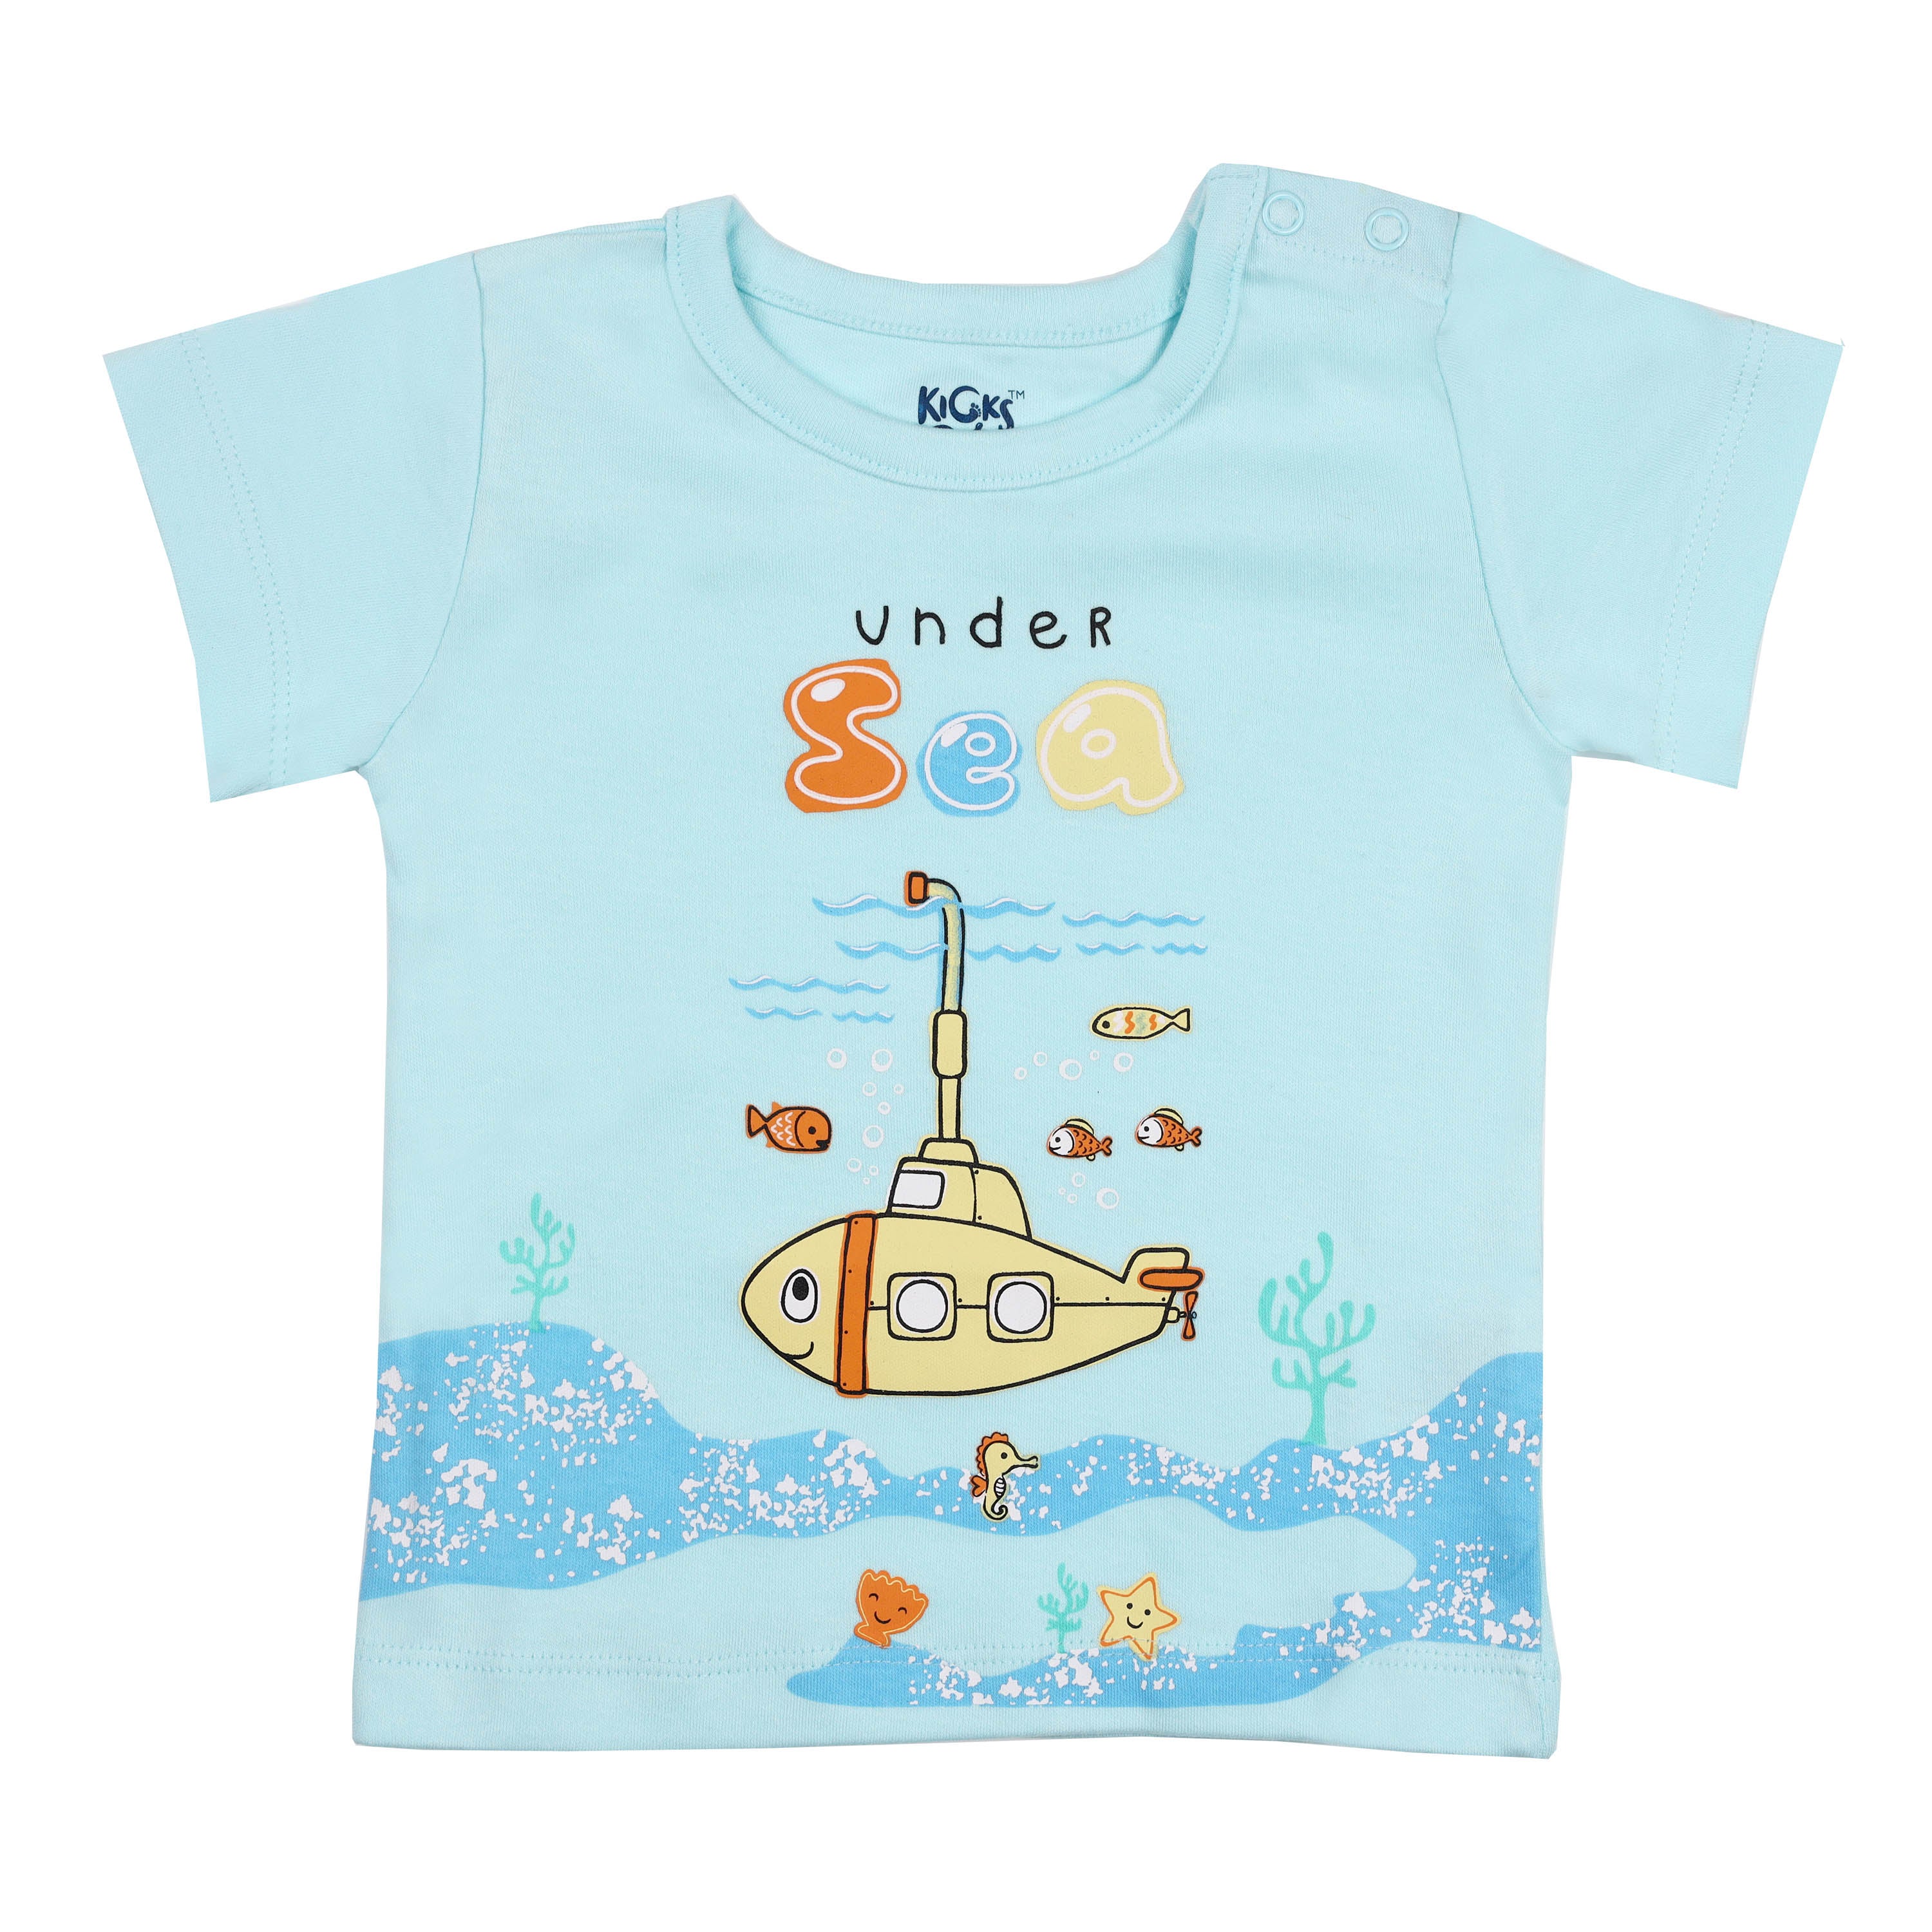 Kicks & Crawl - Underwater Adventure T-shirts - 3 Pack (NB, 0-24 Months)